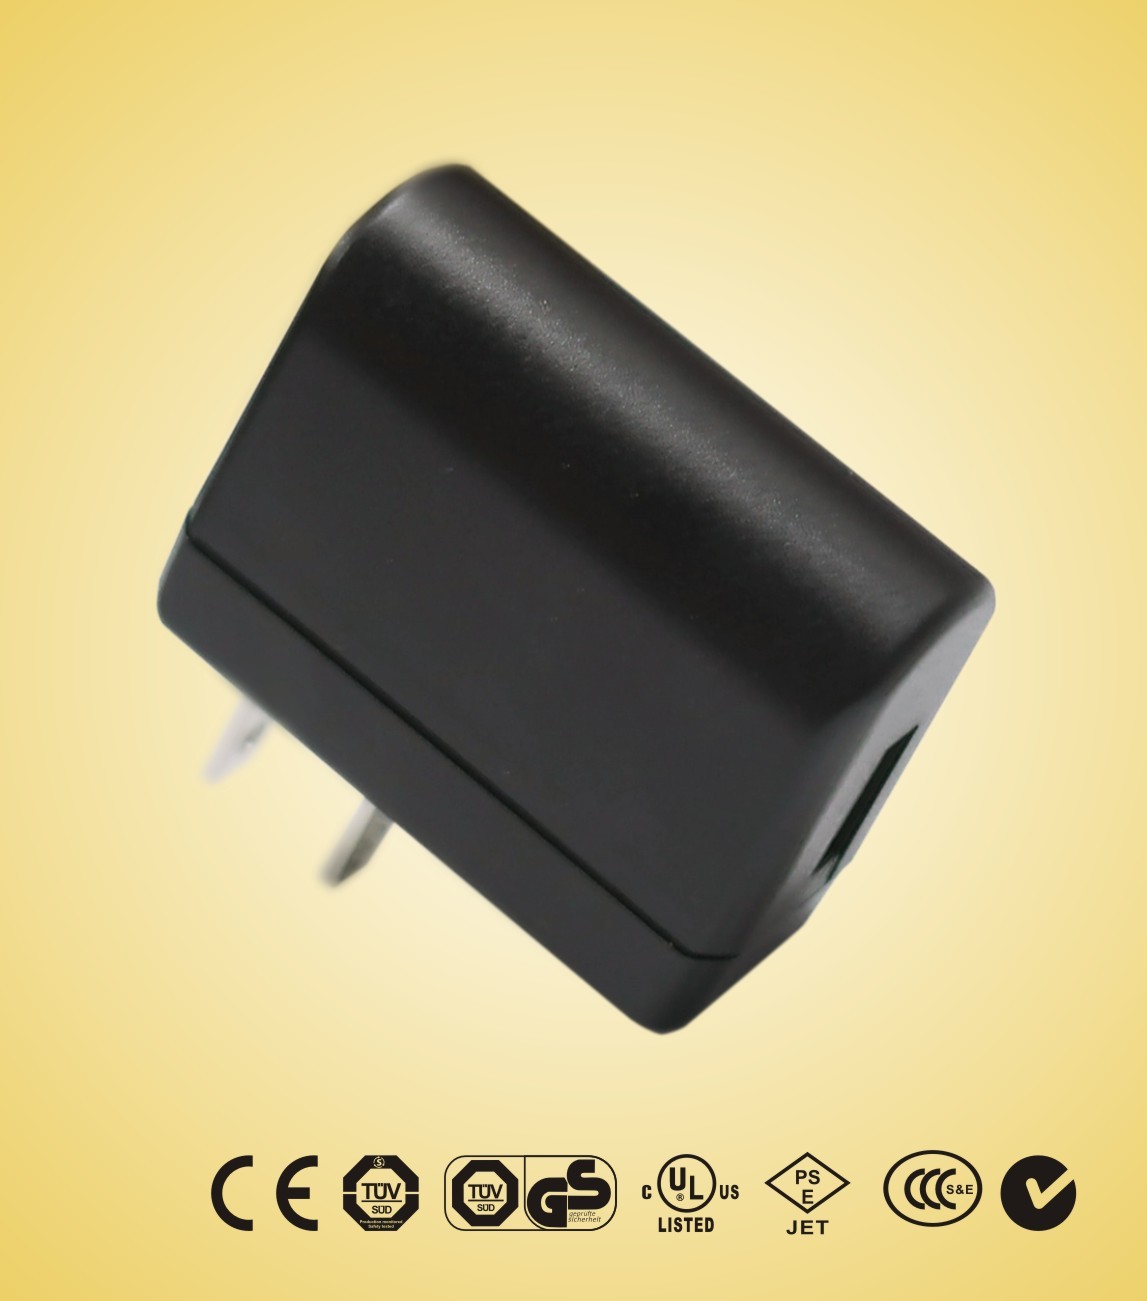 Vert Power Supply 3.5W 120v AC USB Power adaptateur universel pour chargeur Set-top-box, ADSL,